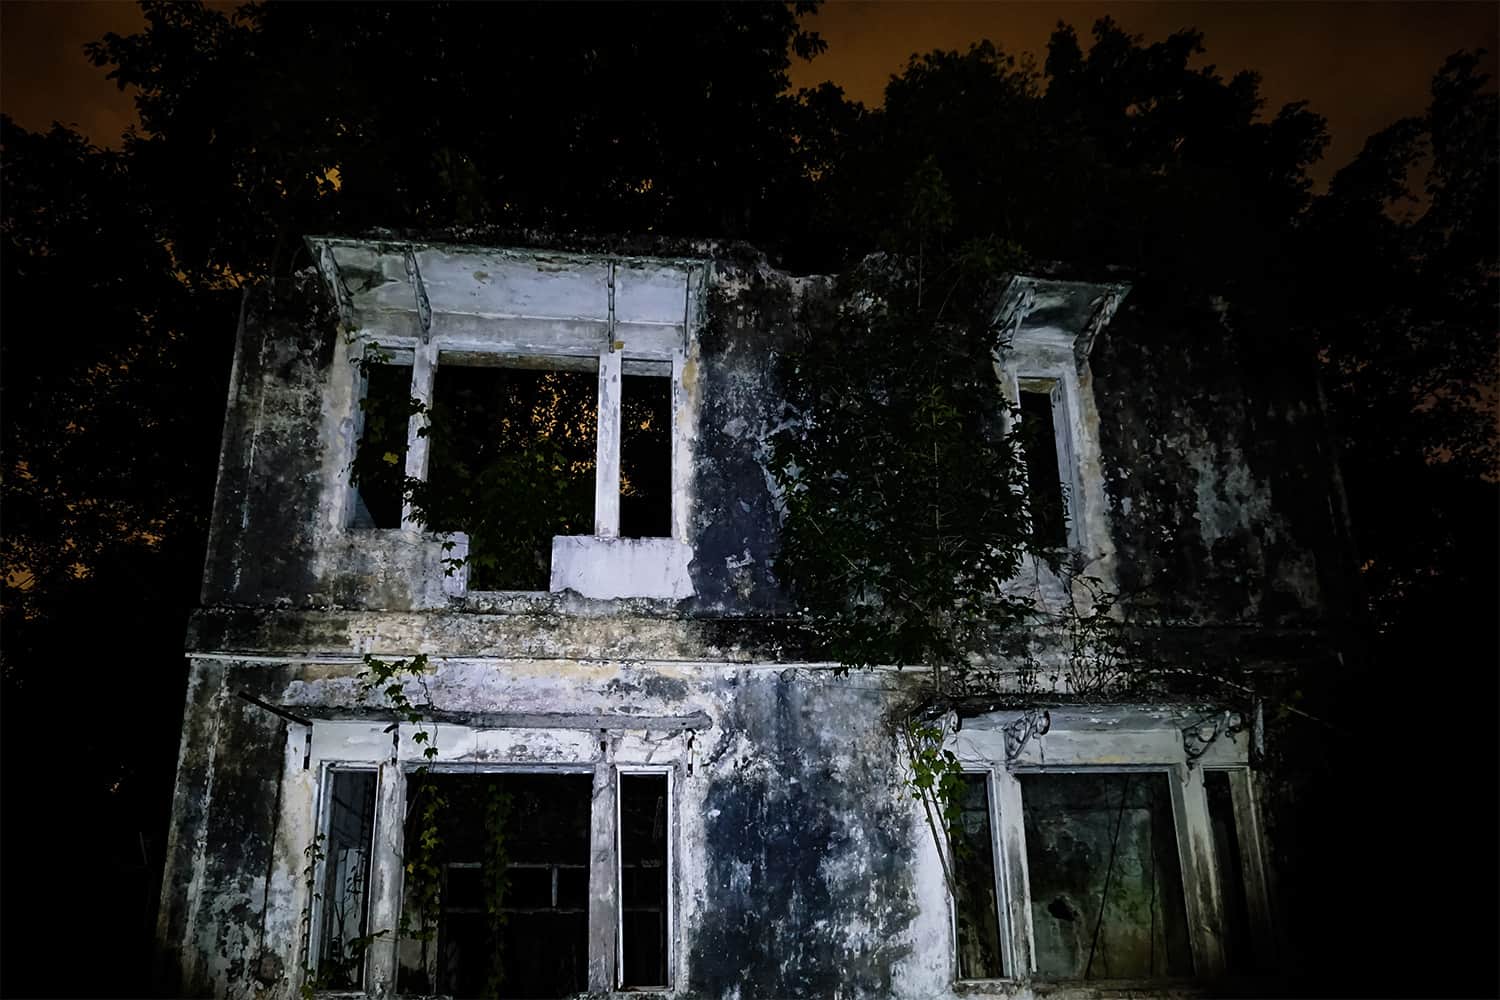 Haunted roads in Malaysia - Jalan Tunku haunted mansion